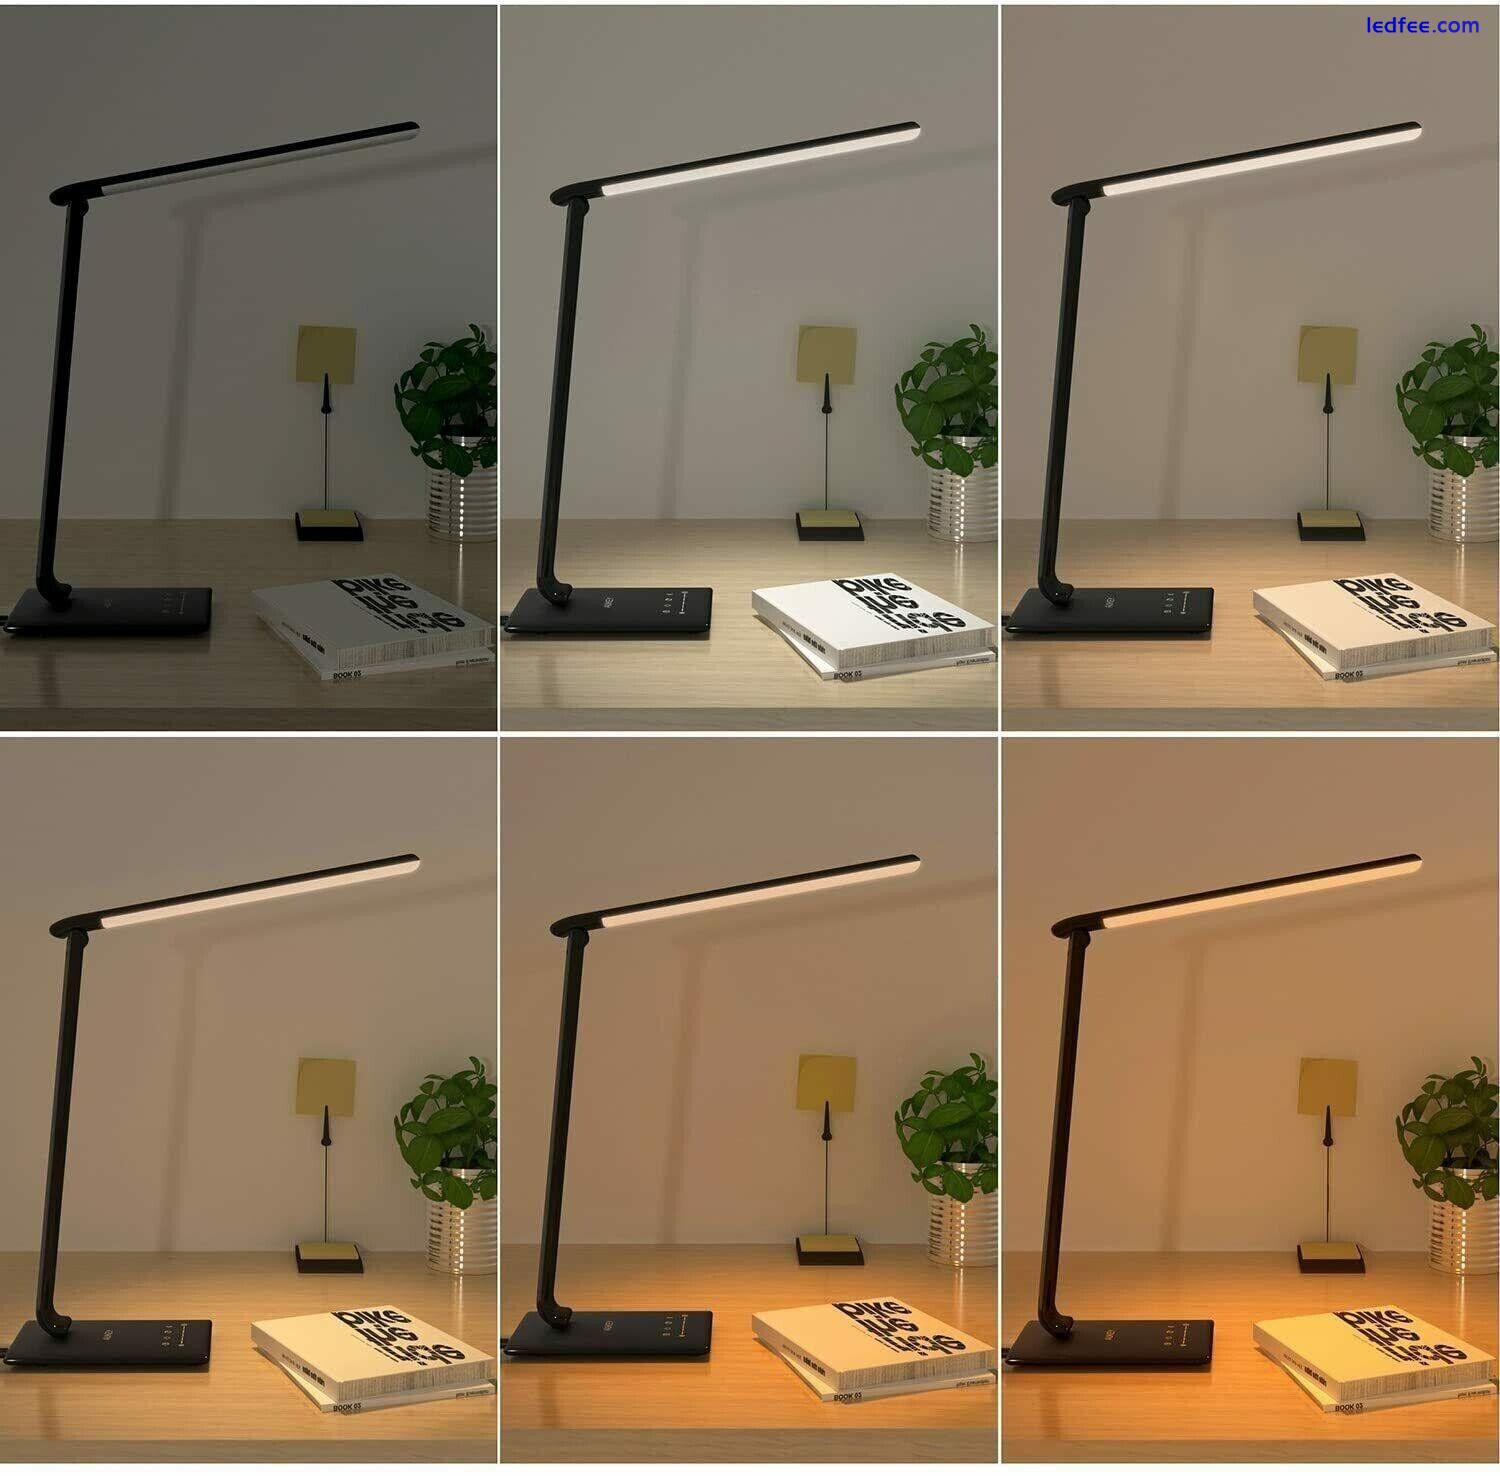 AUKEY Led Desk Lamp 5 Colours Temperatures 7 Brightness Levels USB Charging Port 2 